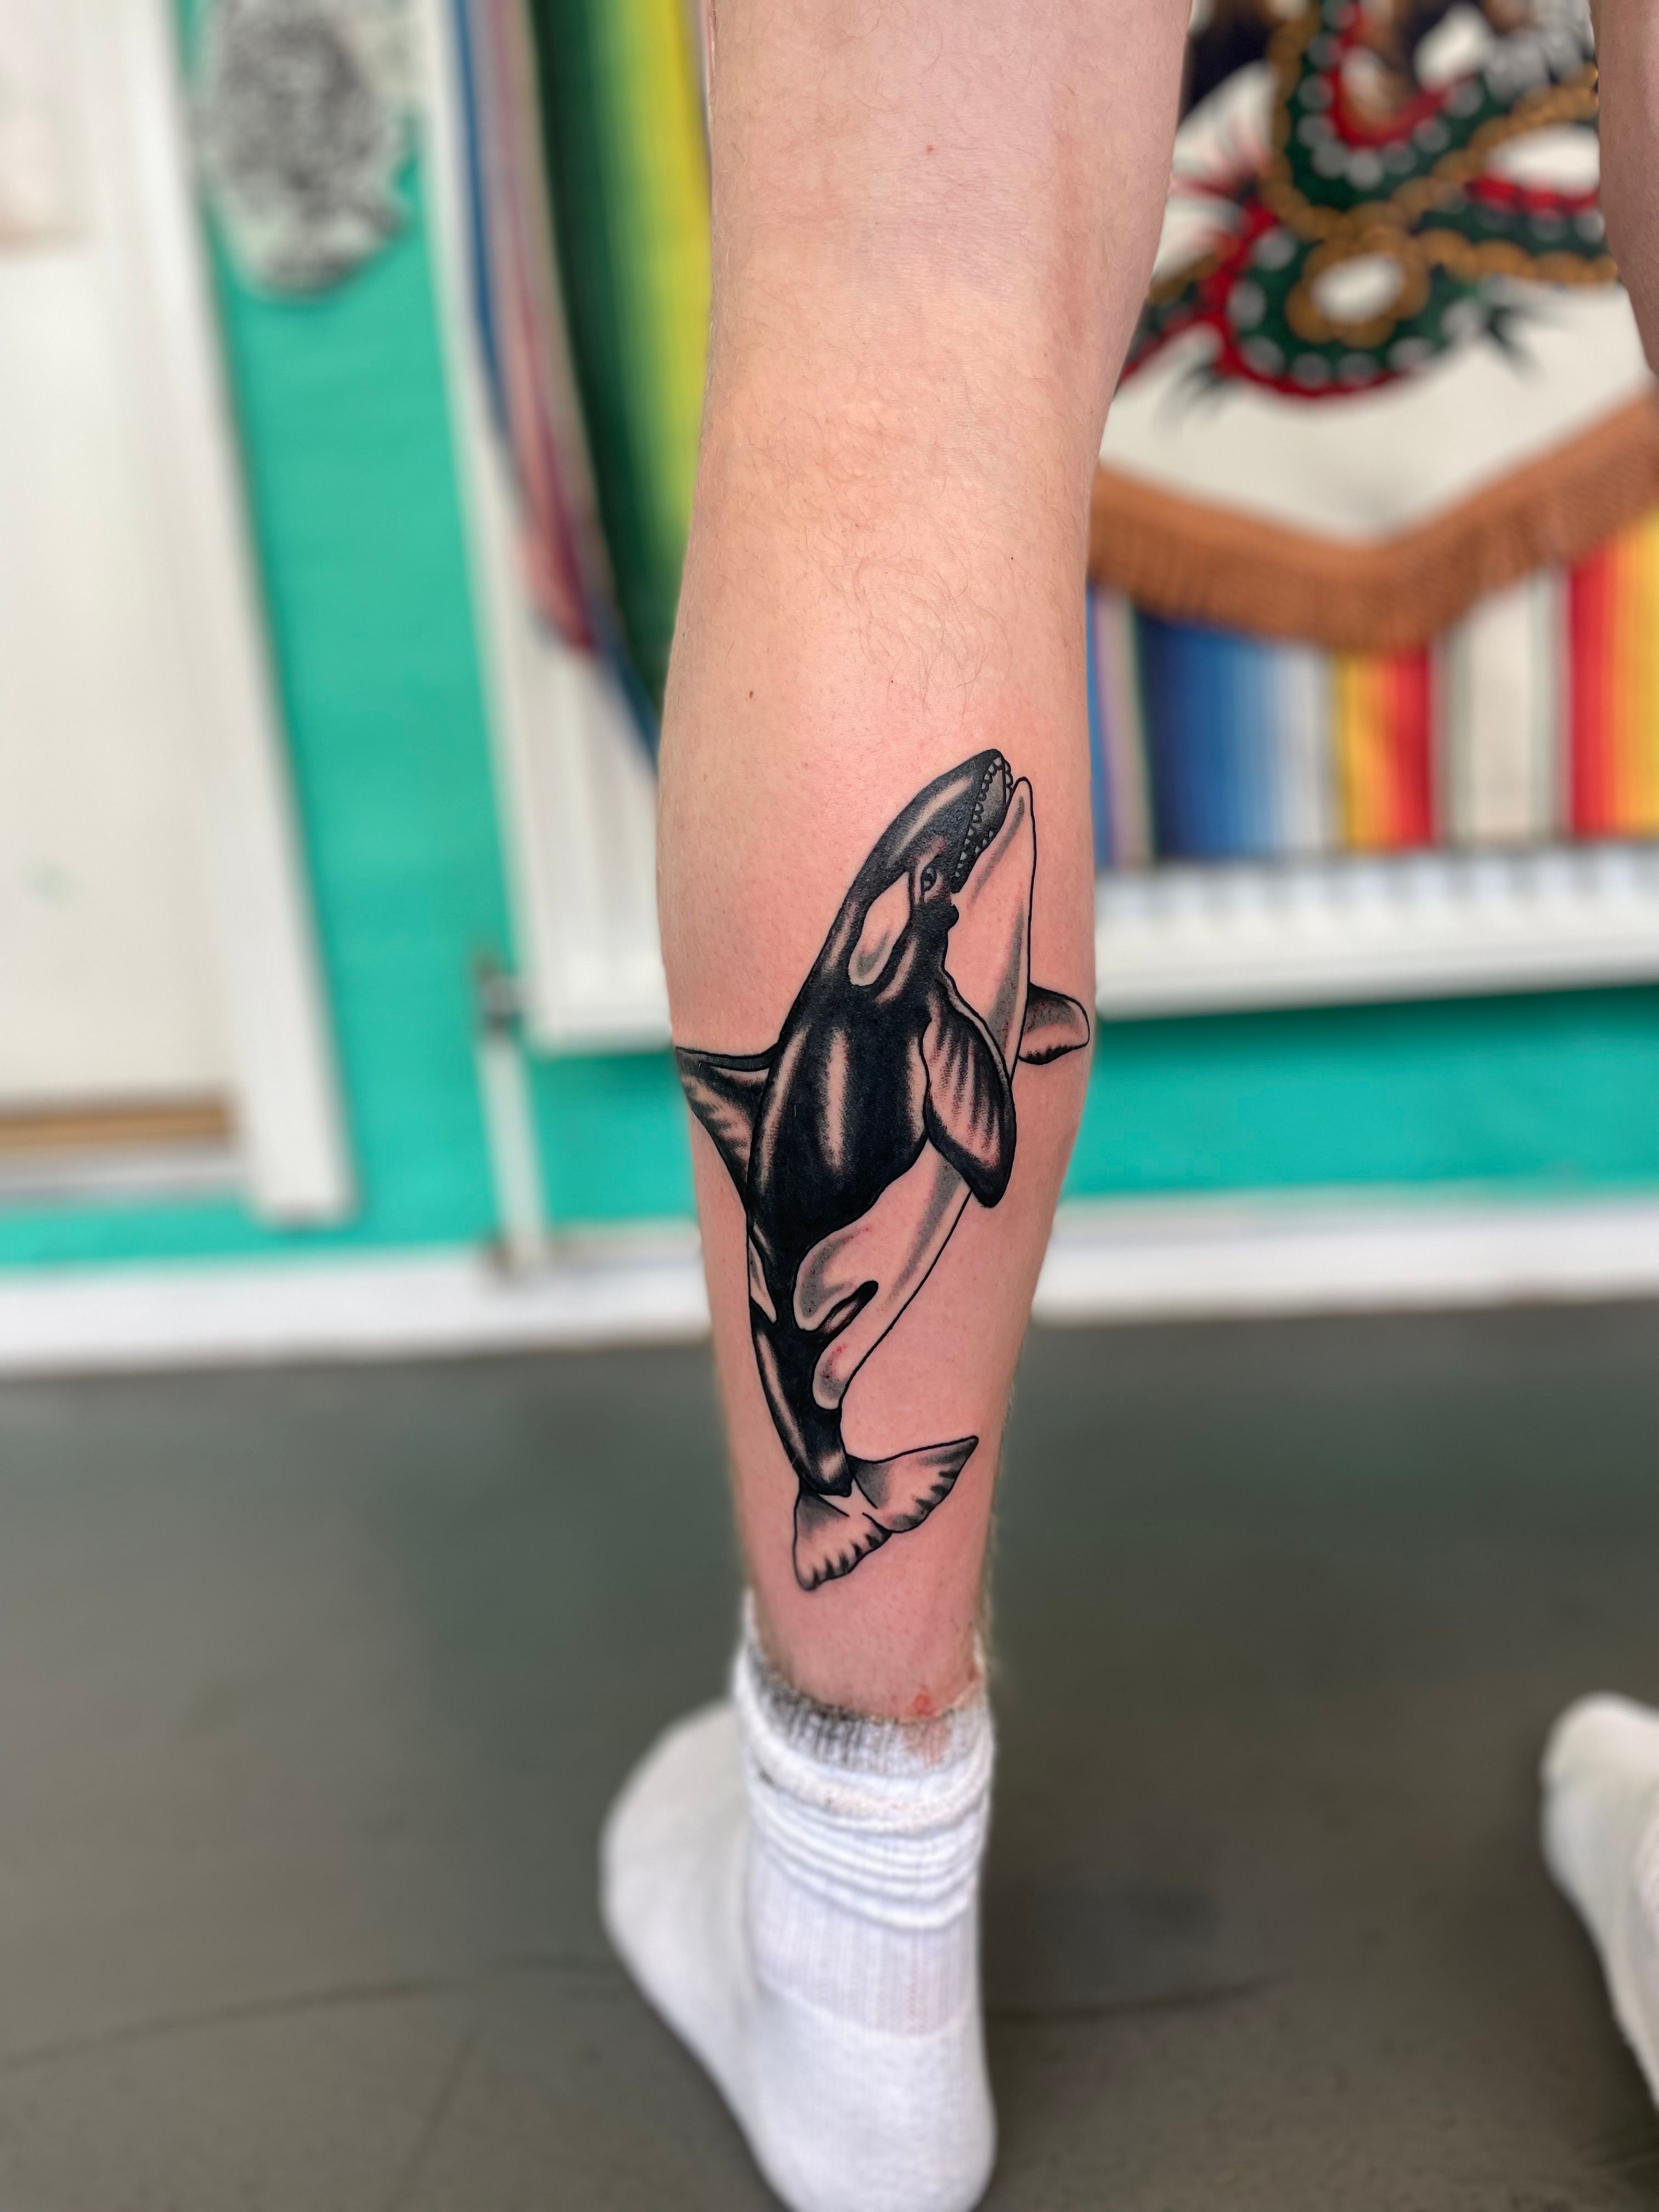 Minimalsitic orca tattoo located on the wrist.